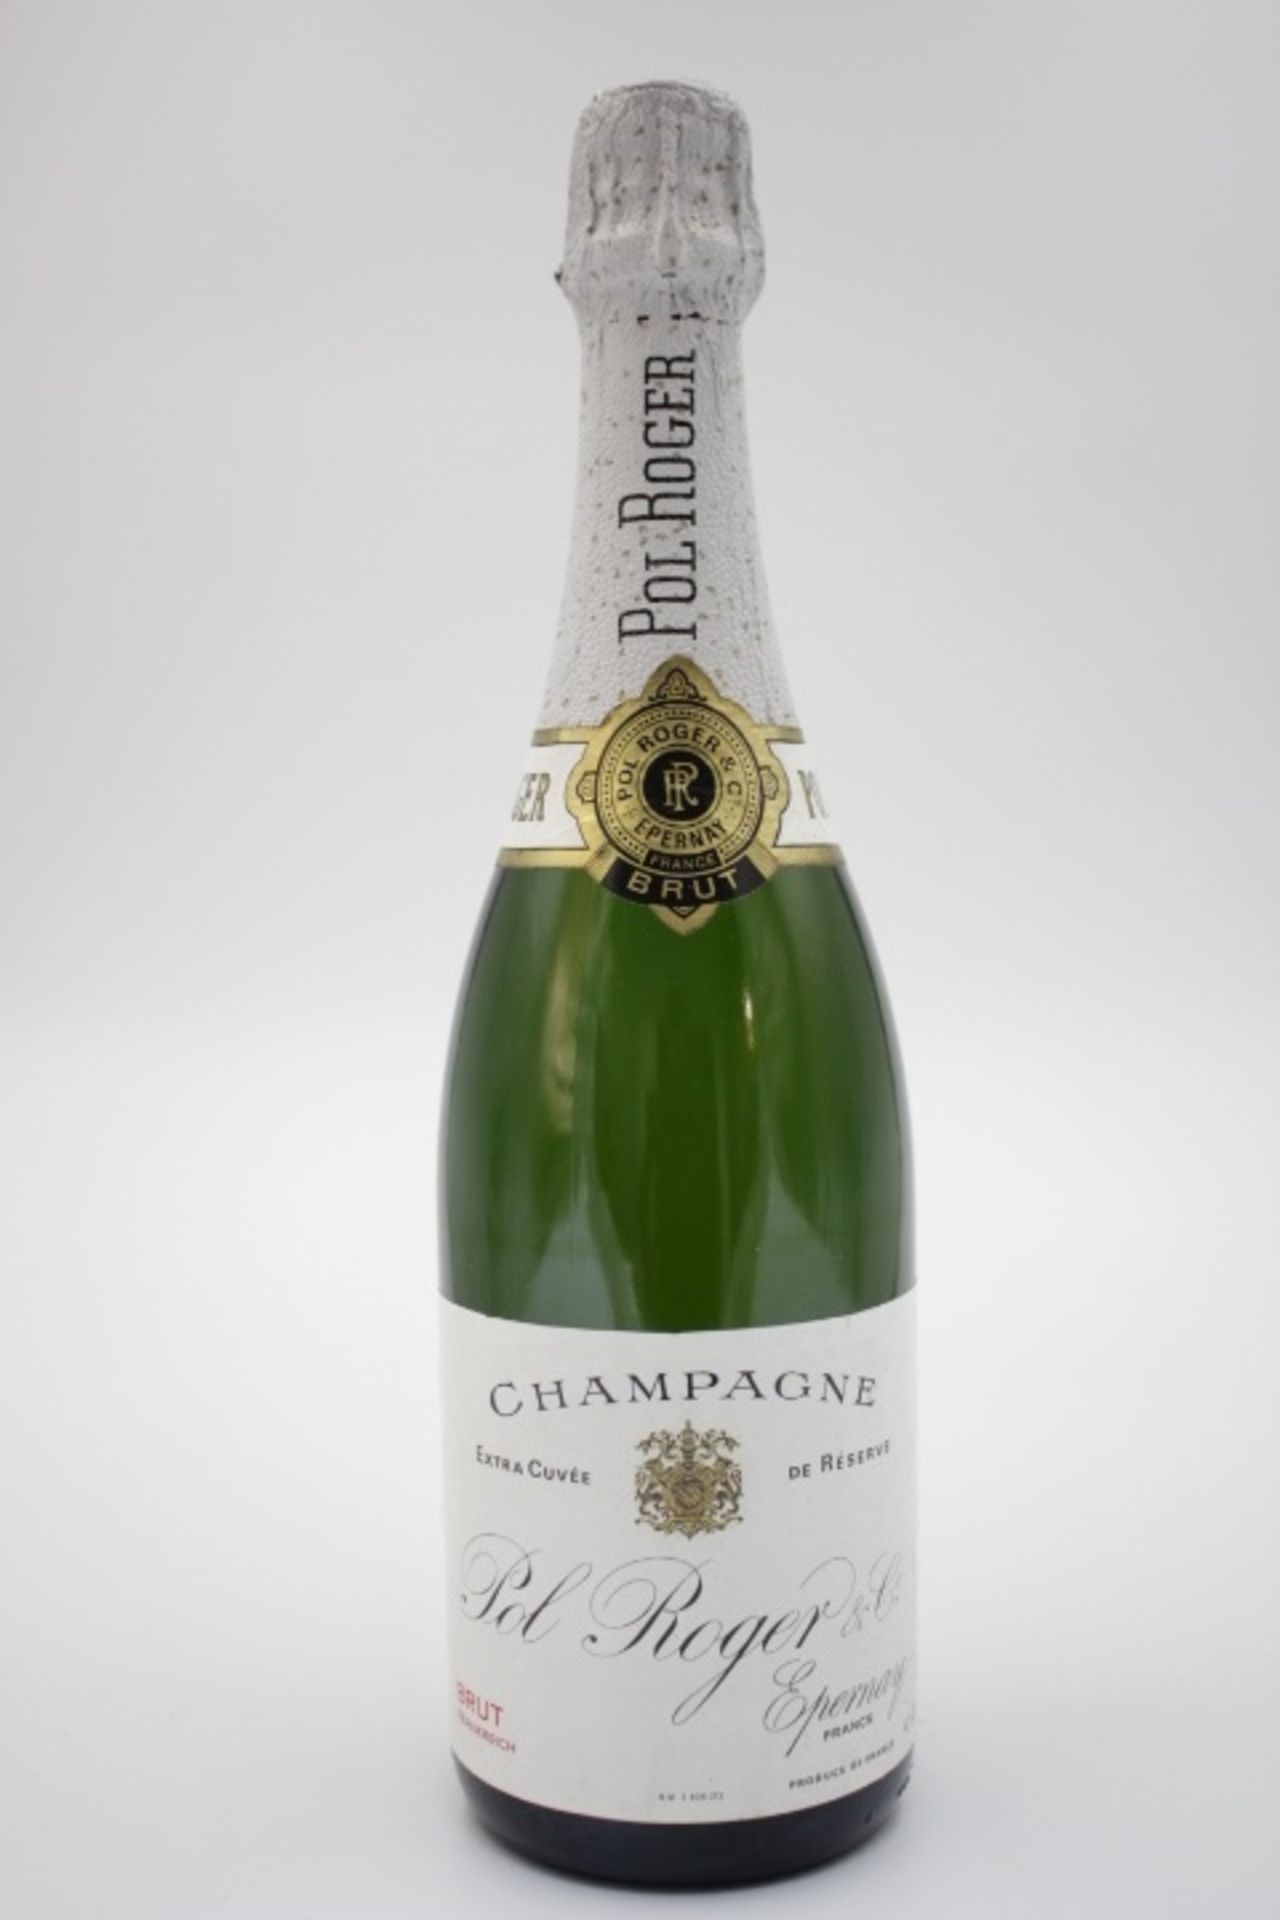 Champagne Pol Roger Brut Extra Cuvee Frankreich 0,75cl.